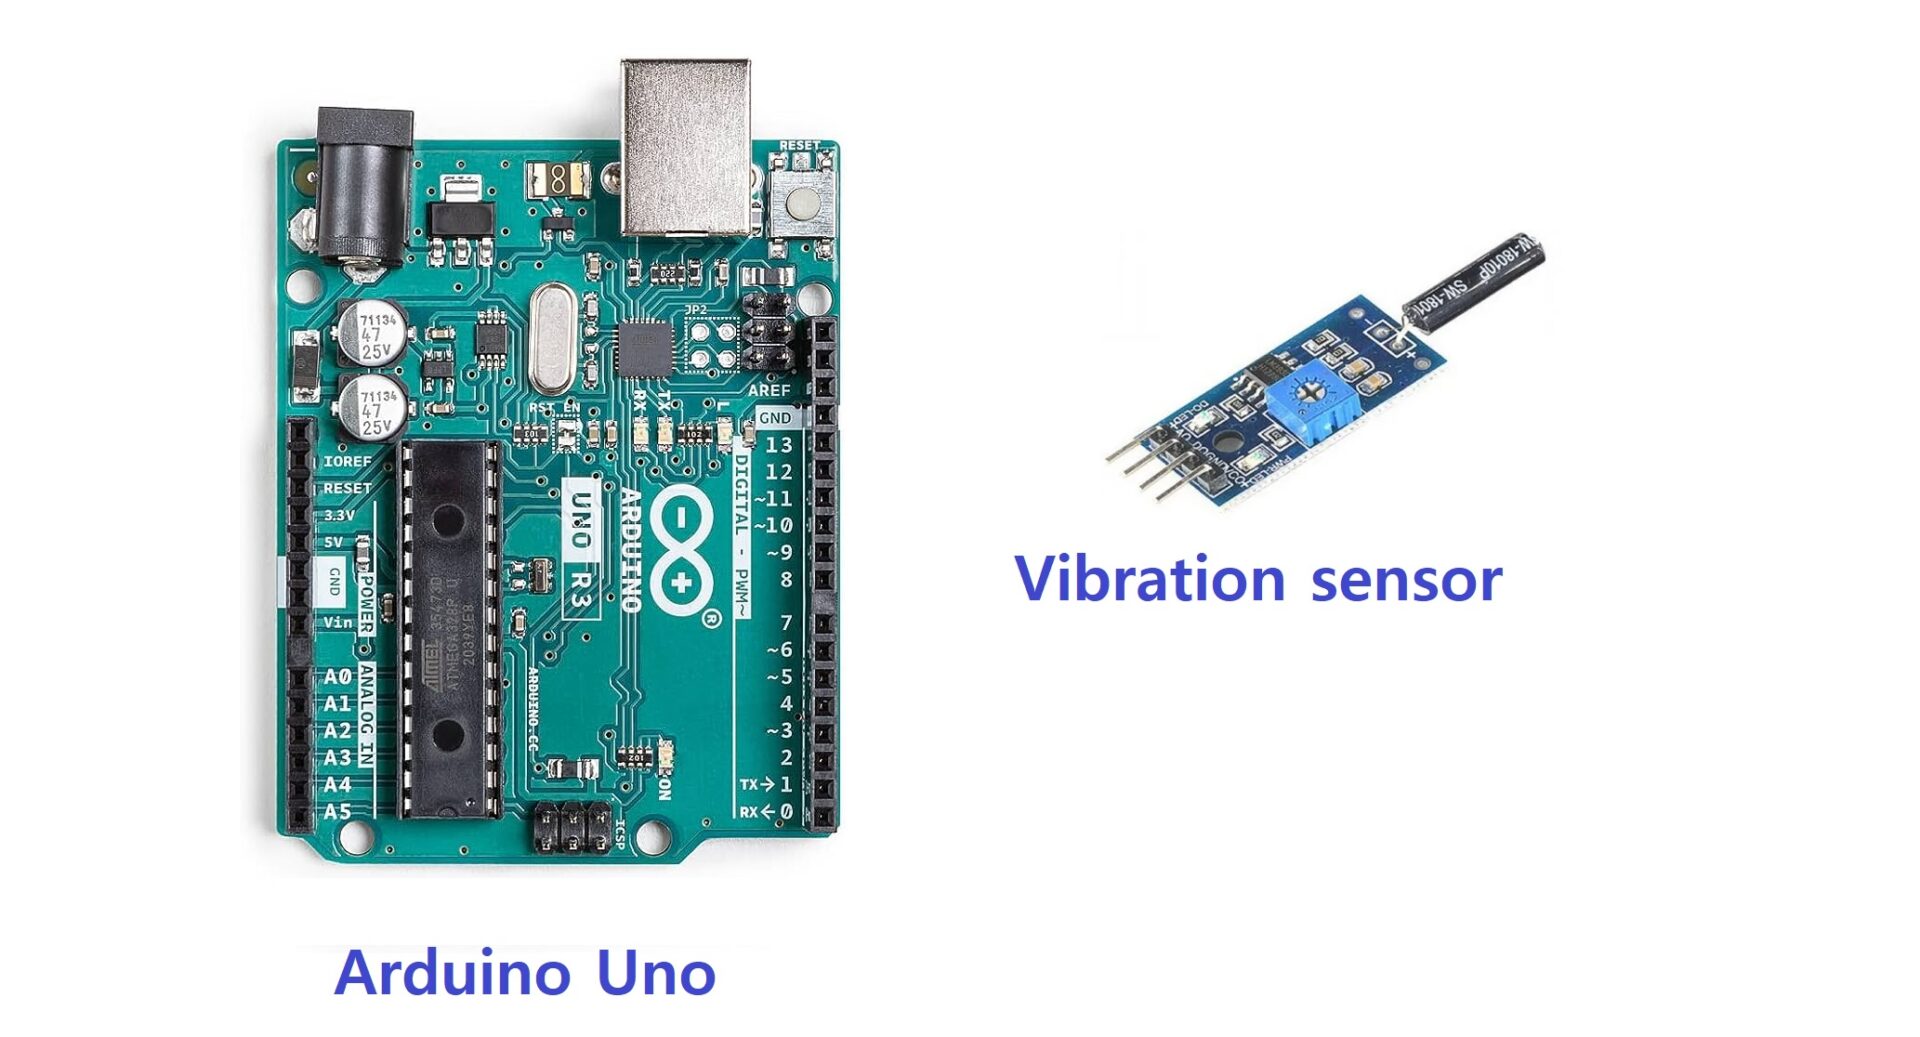 Vibration sensor with arduino uno